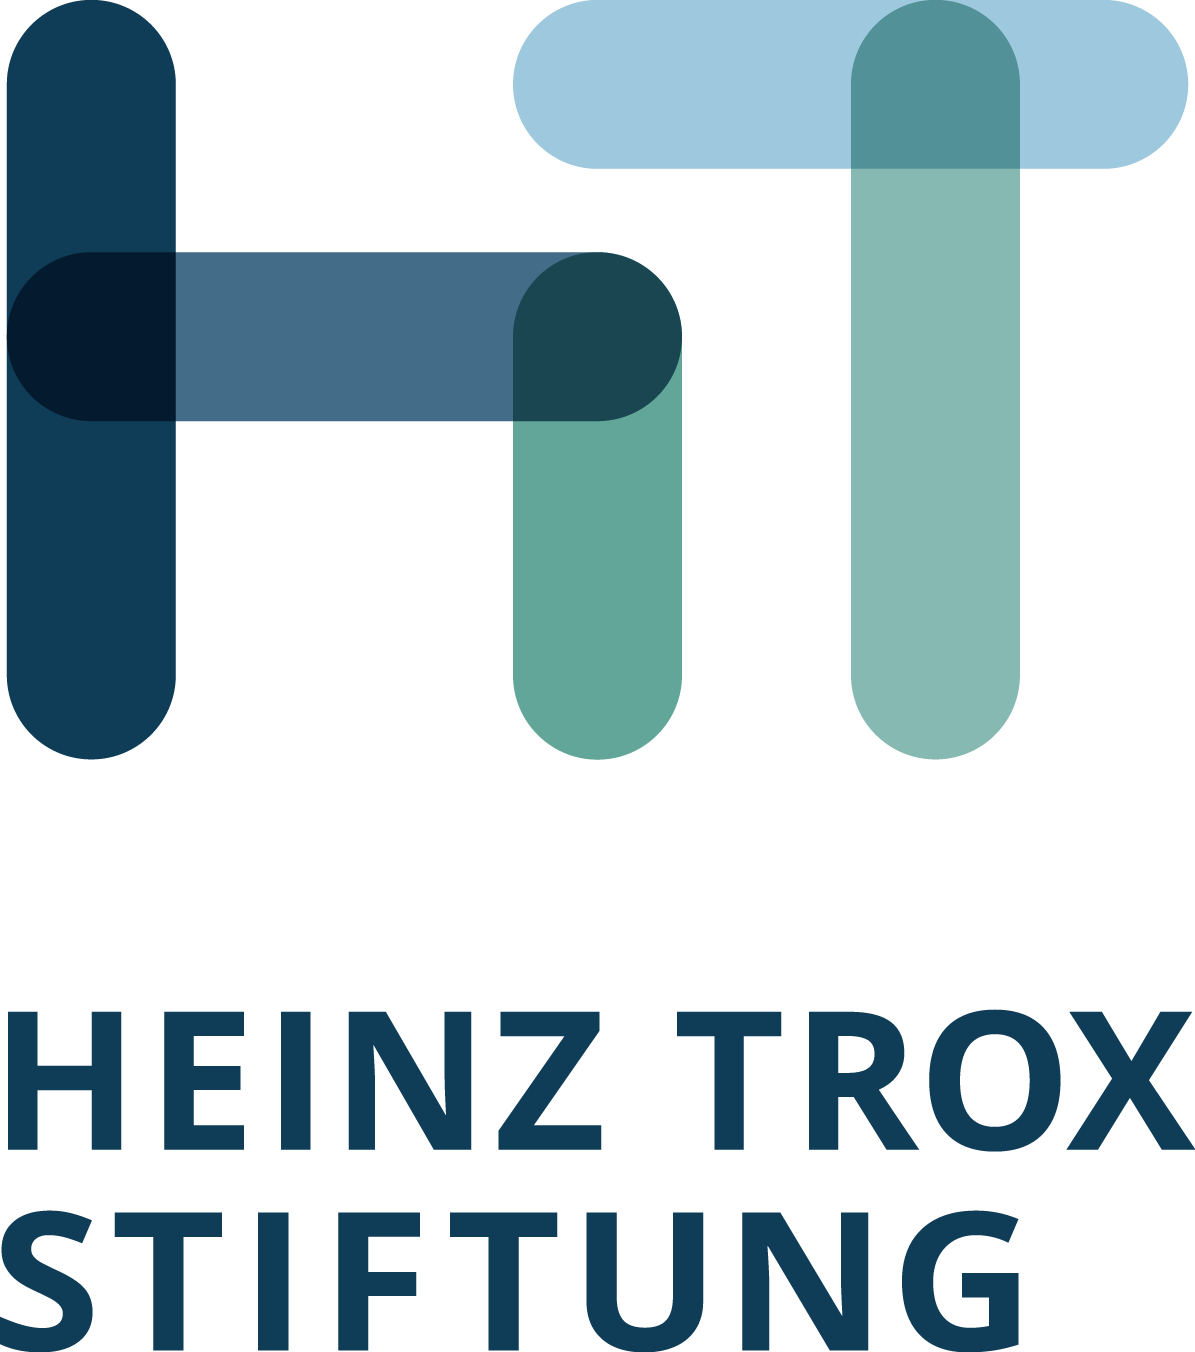 (c) Heinz-trox-foundation.com